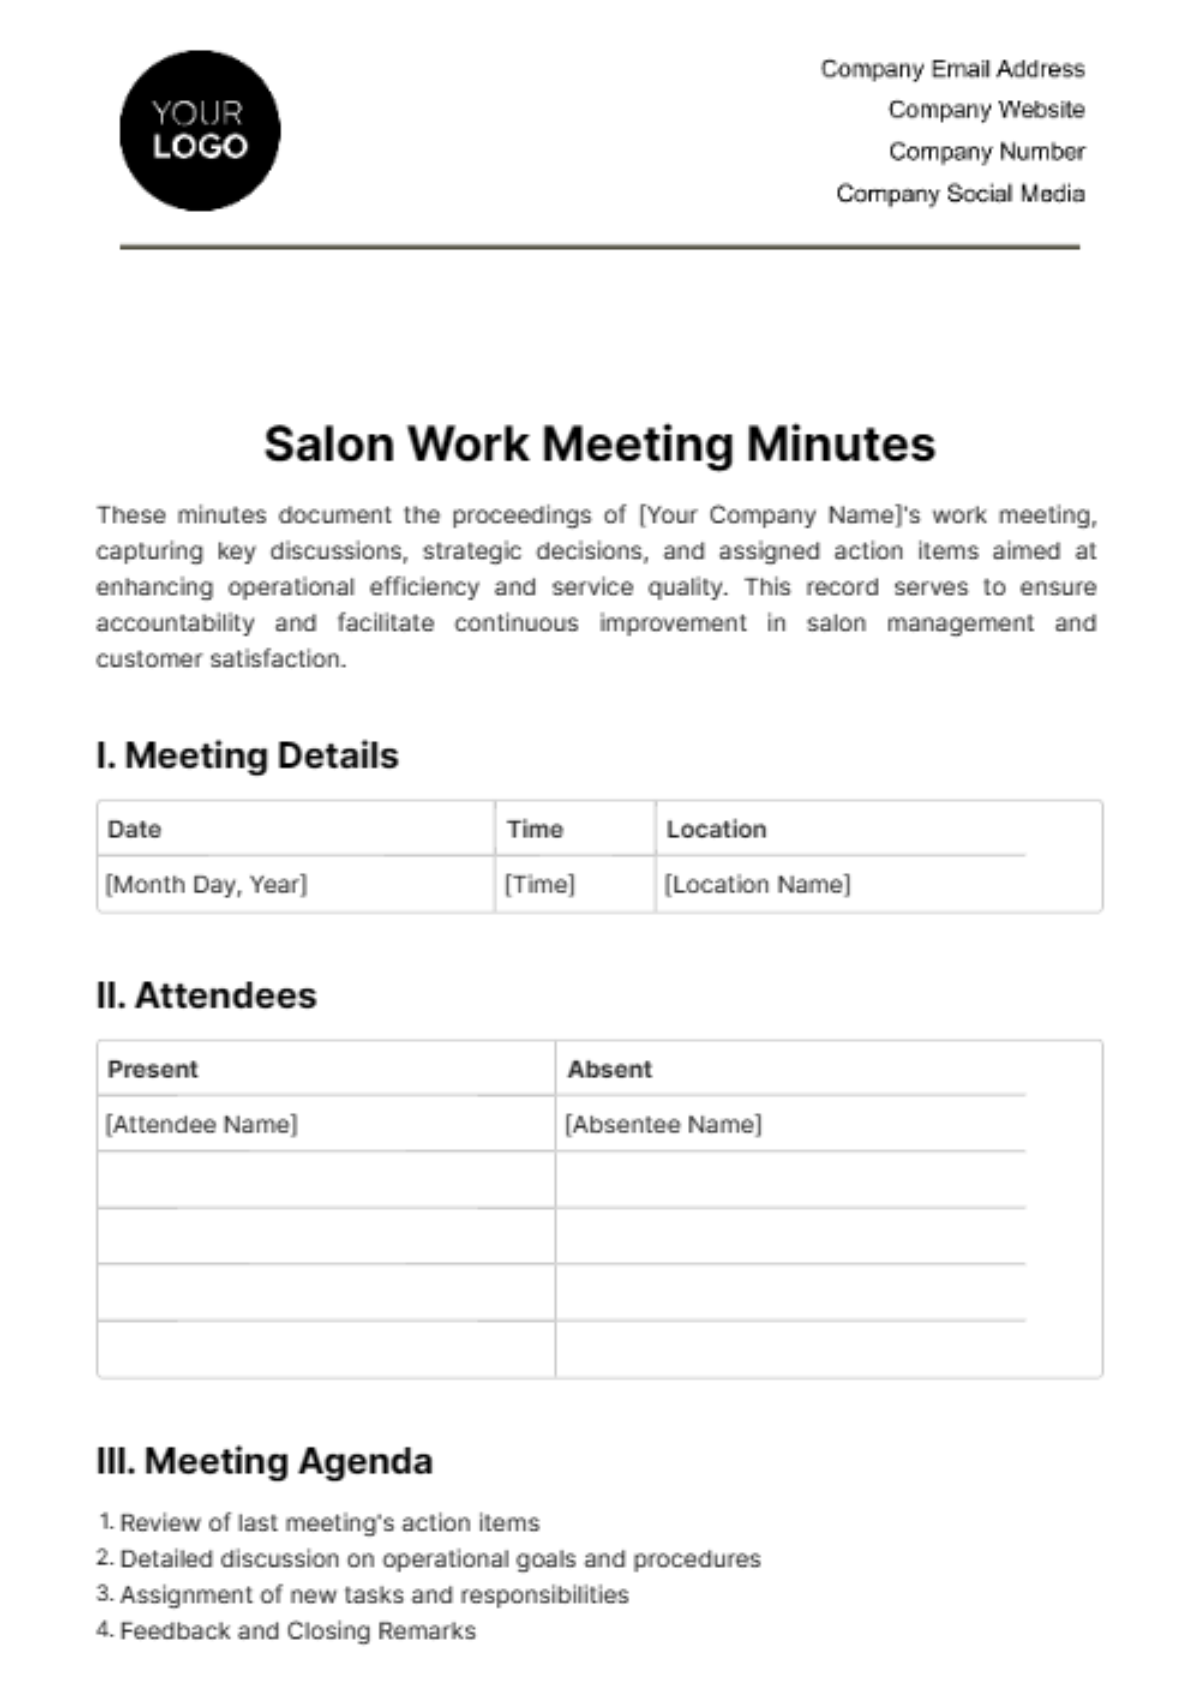 Salon Work Meeting Minute Template